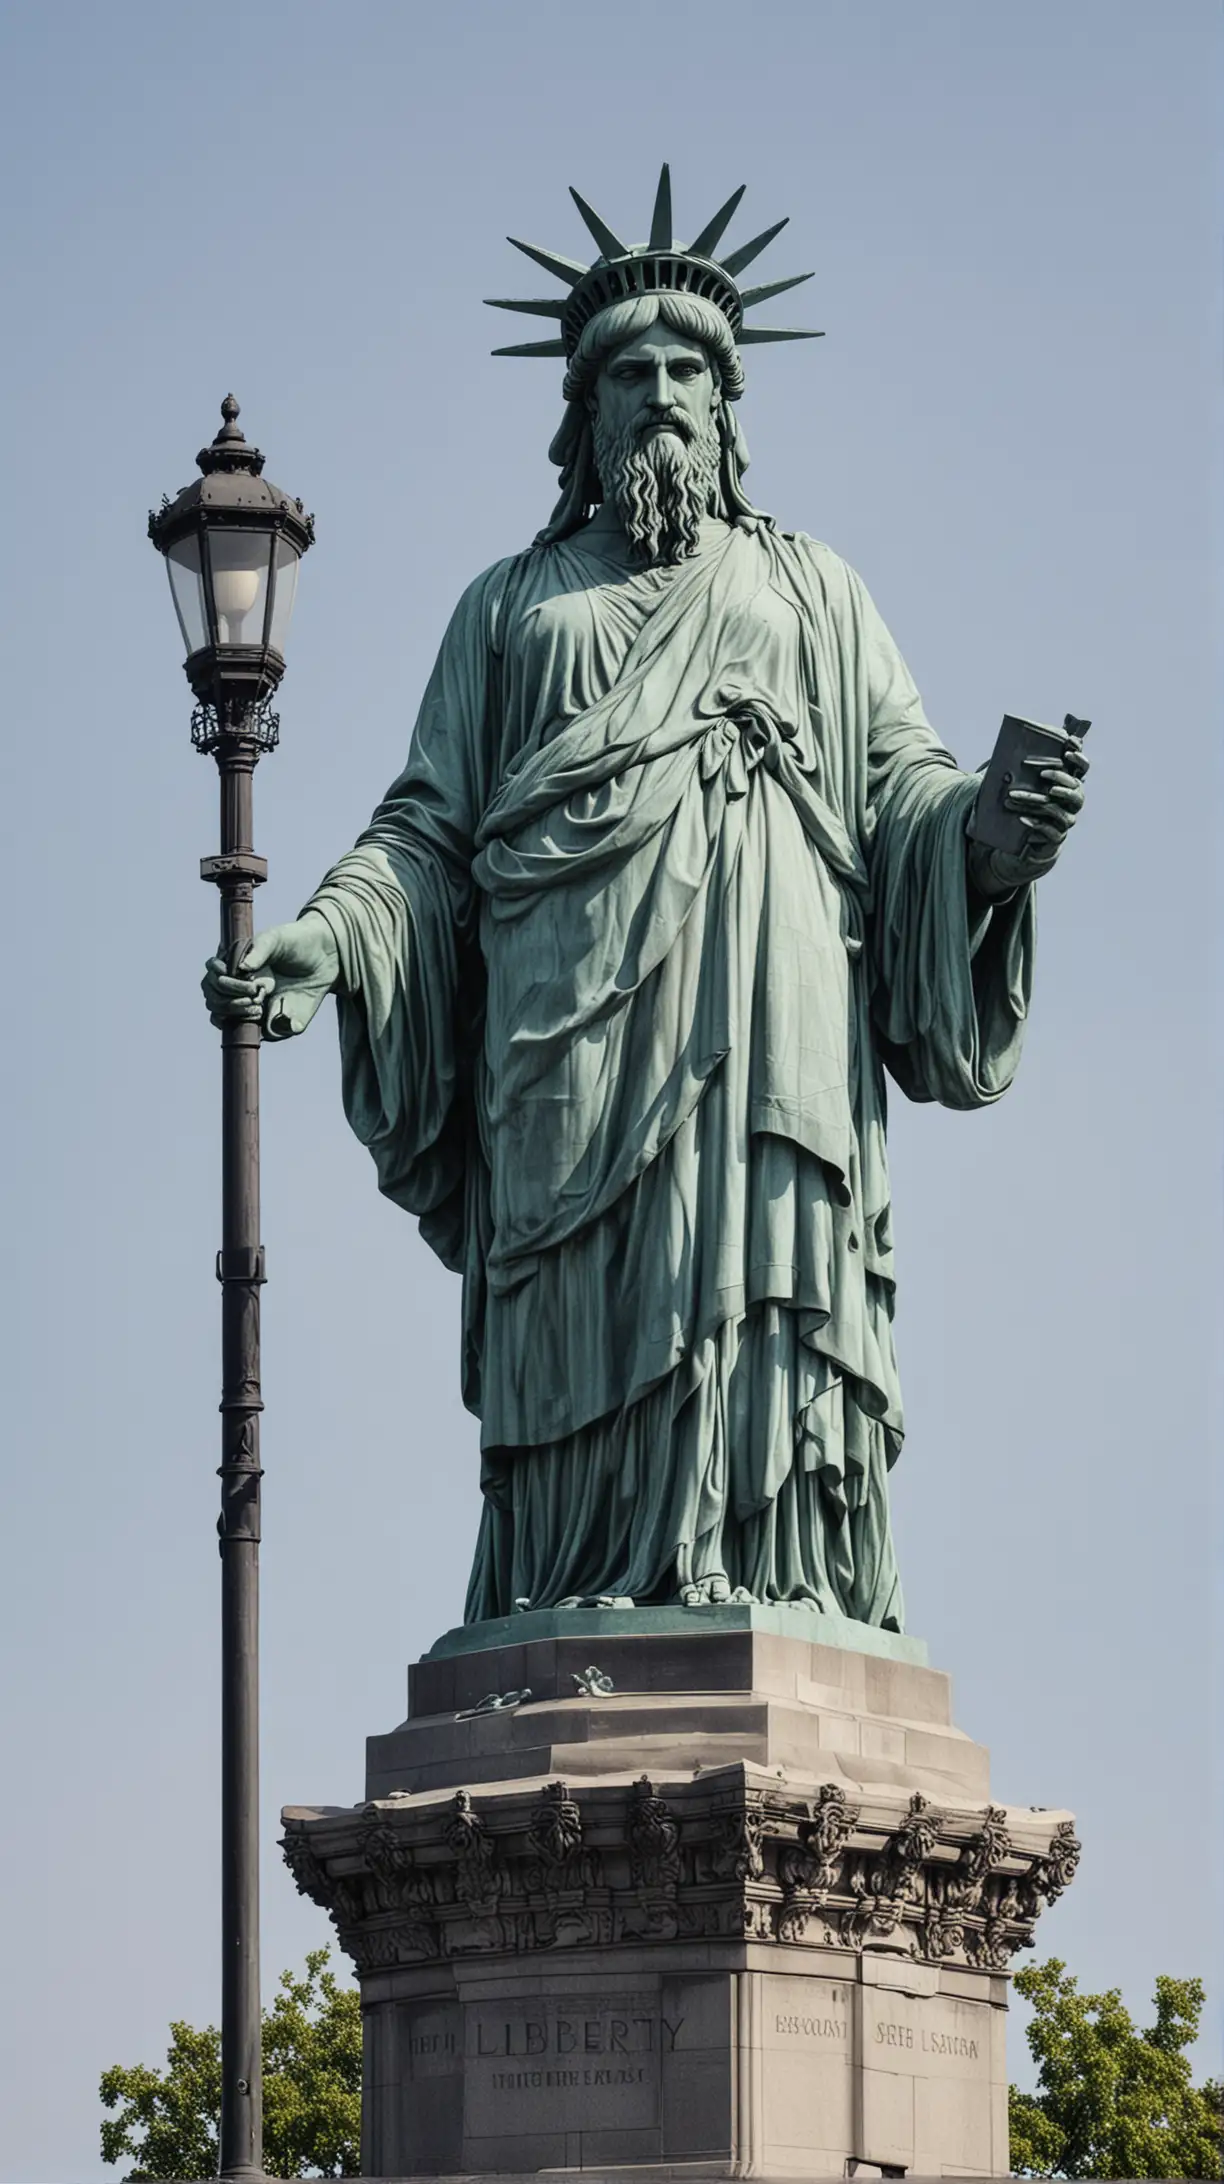 Liberty statue with a big beard